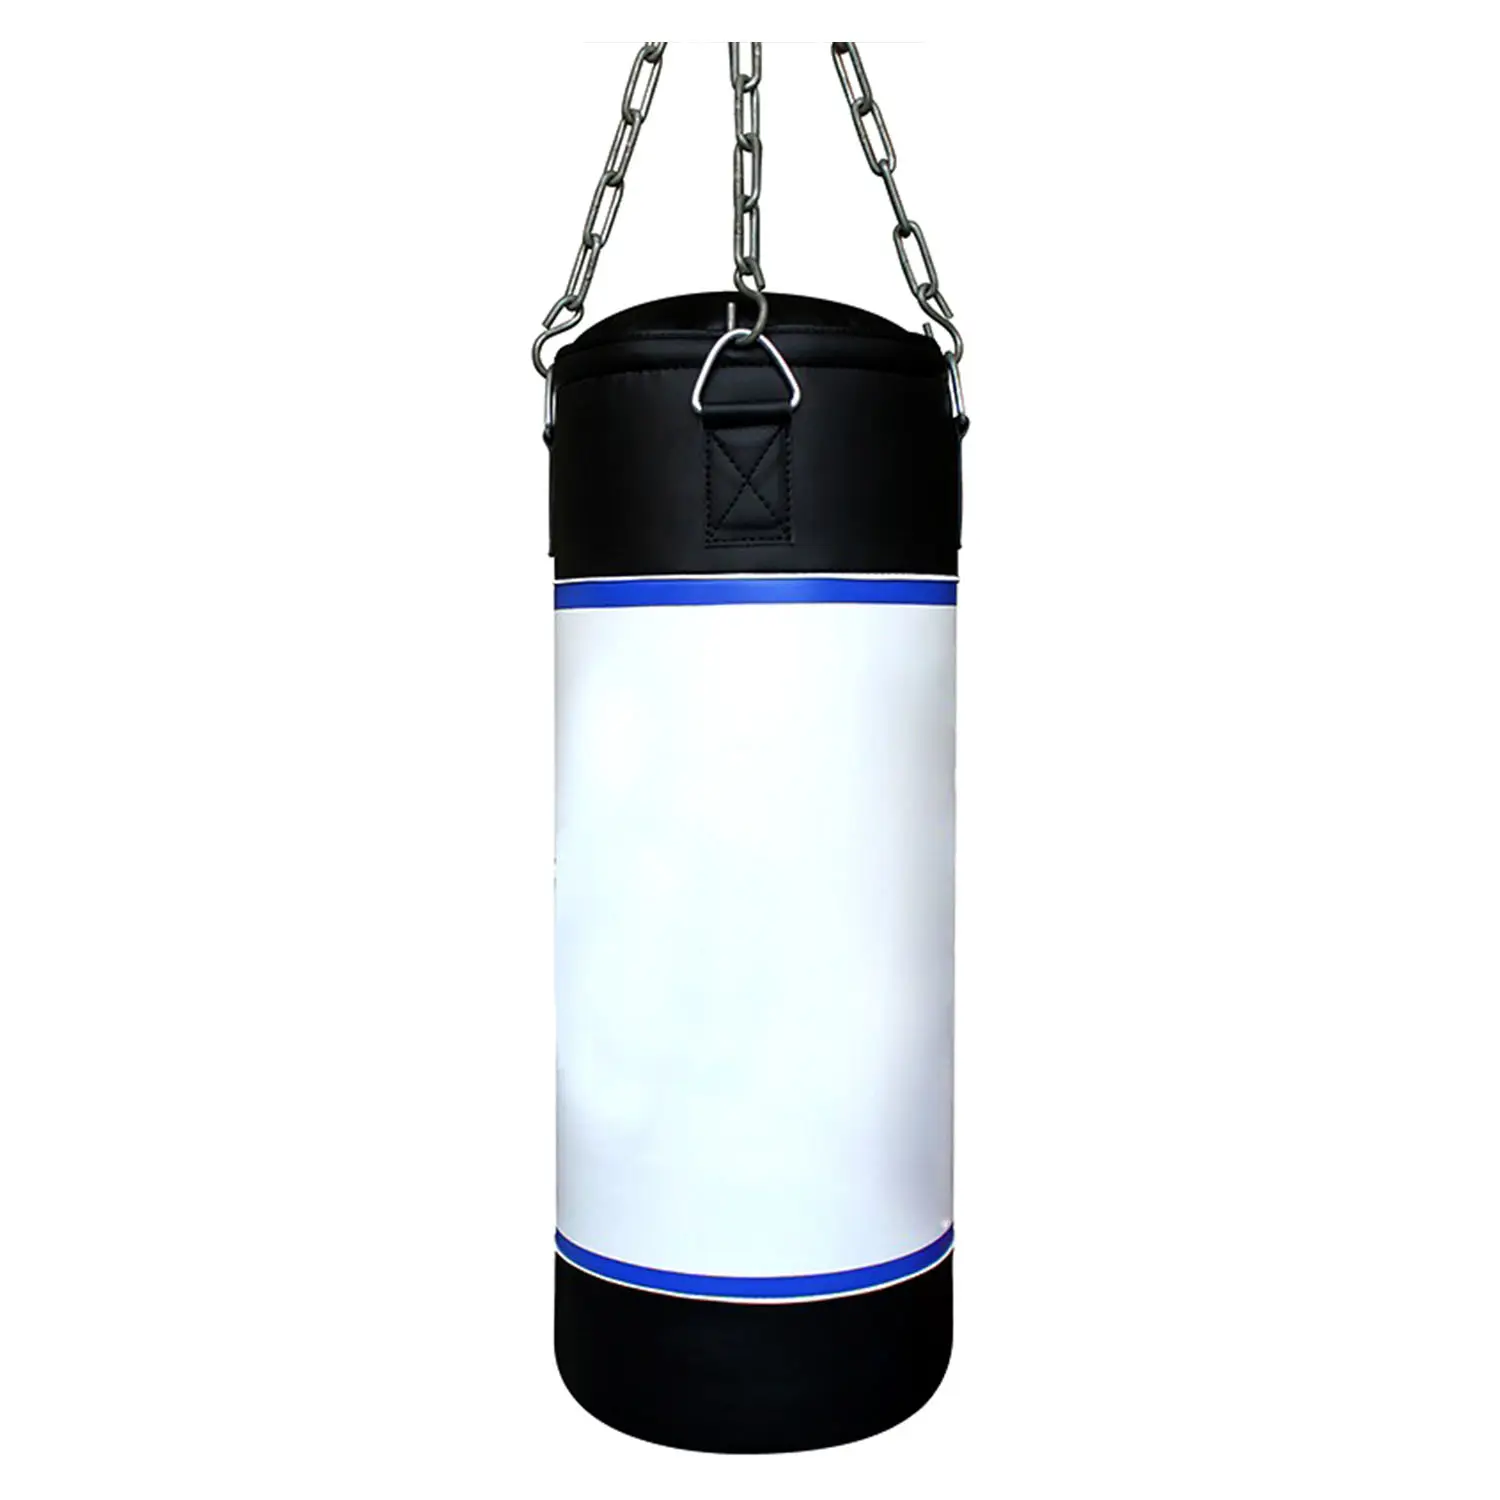 2022 New Arrival Custom Hign Quality Boxing Man Punching Bags Heavy Free Standing Boxing Sand Bag/Box Equipment punching